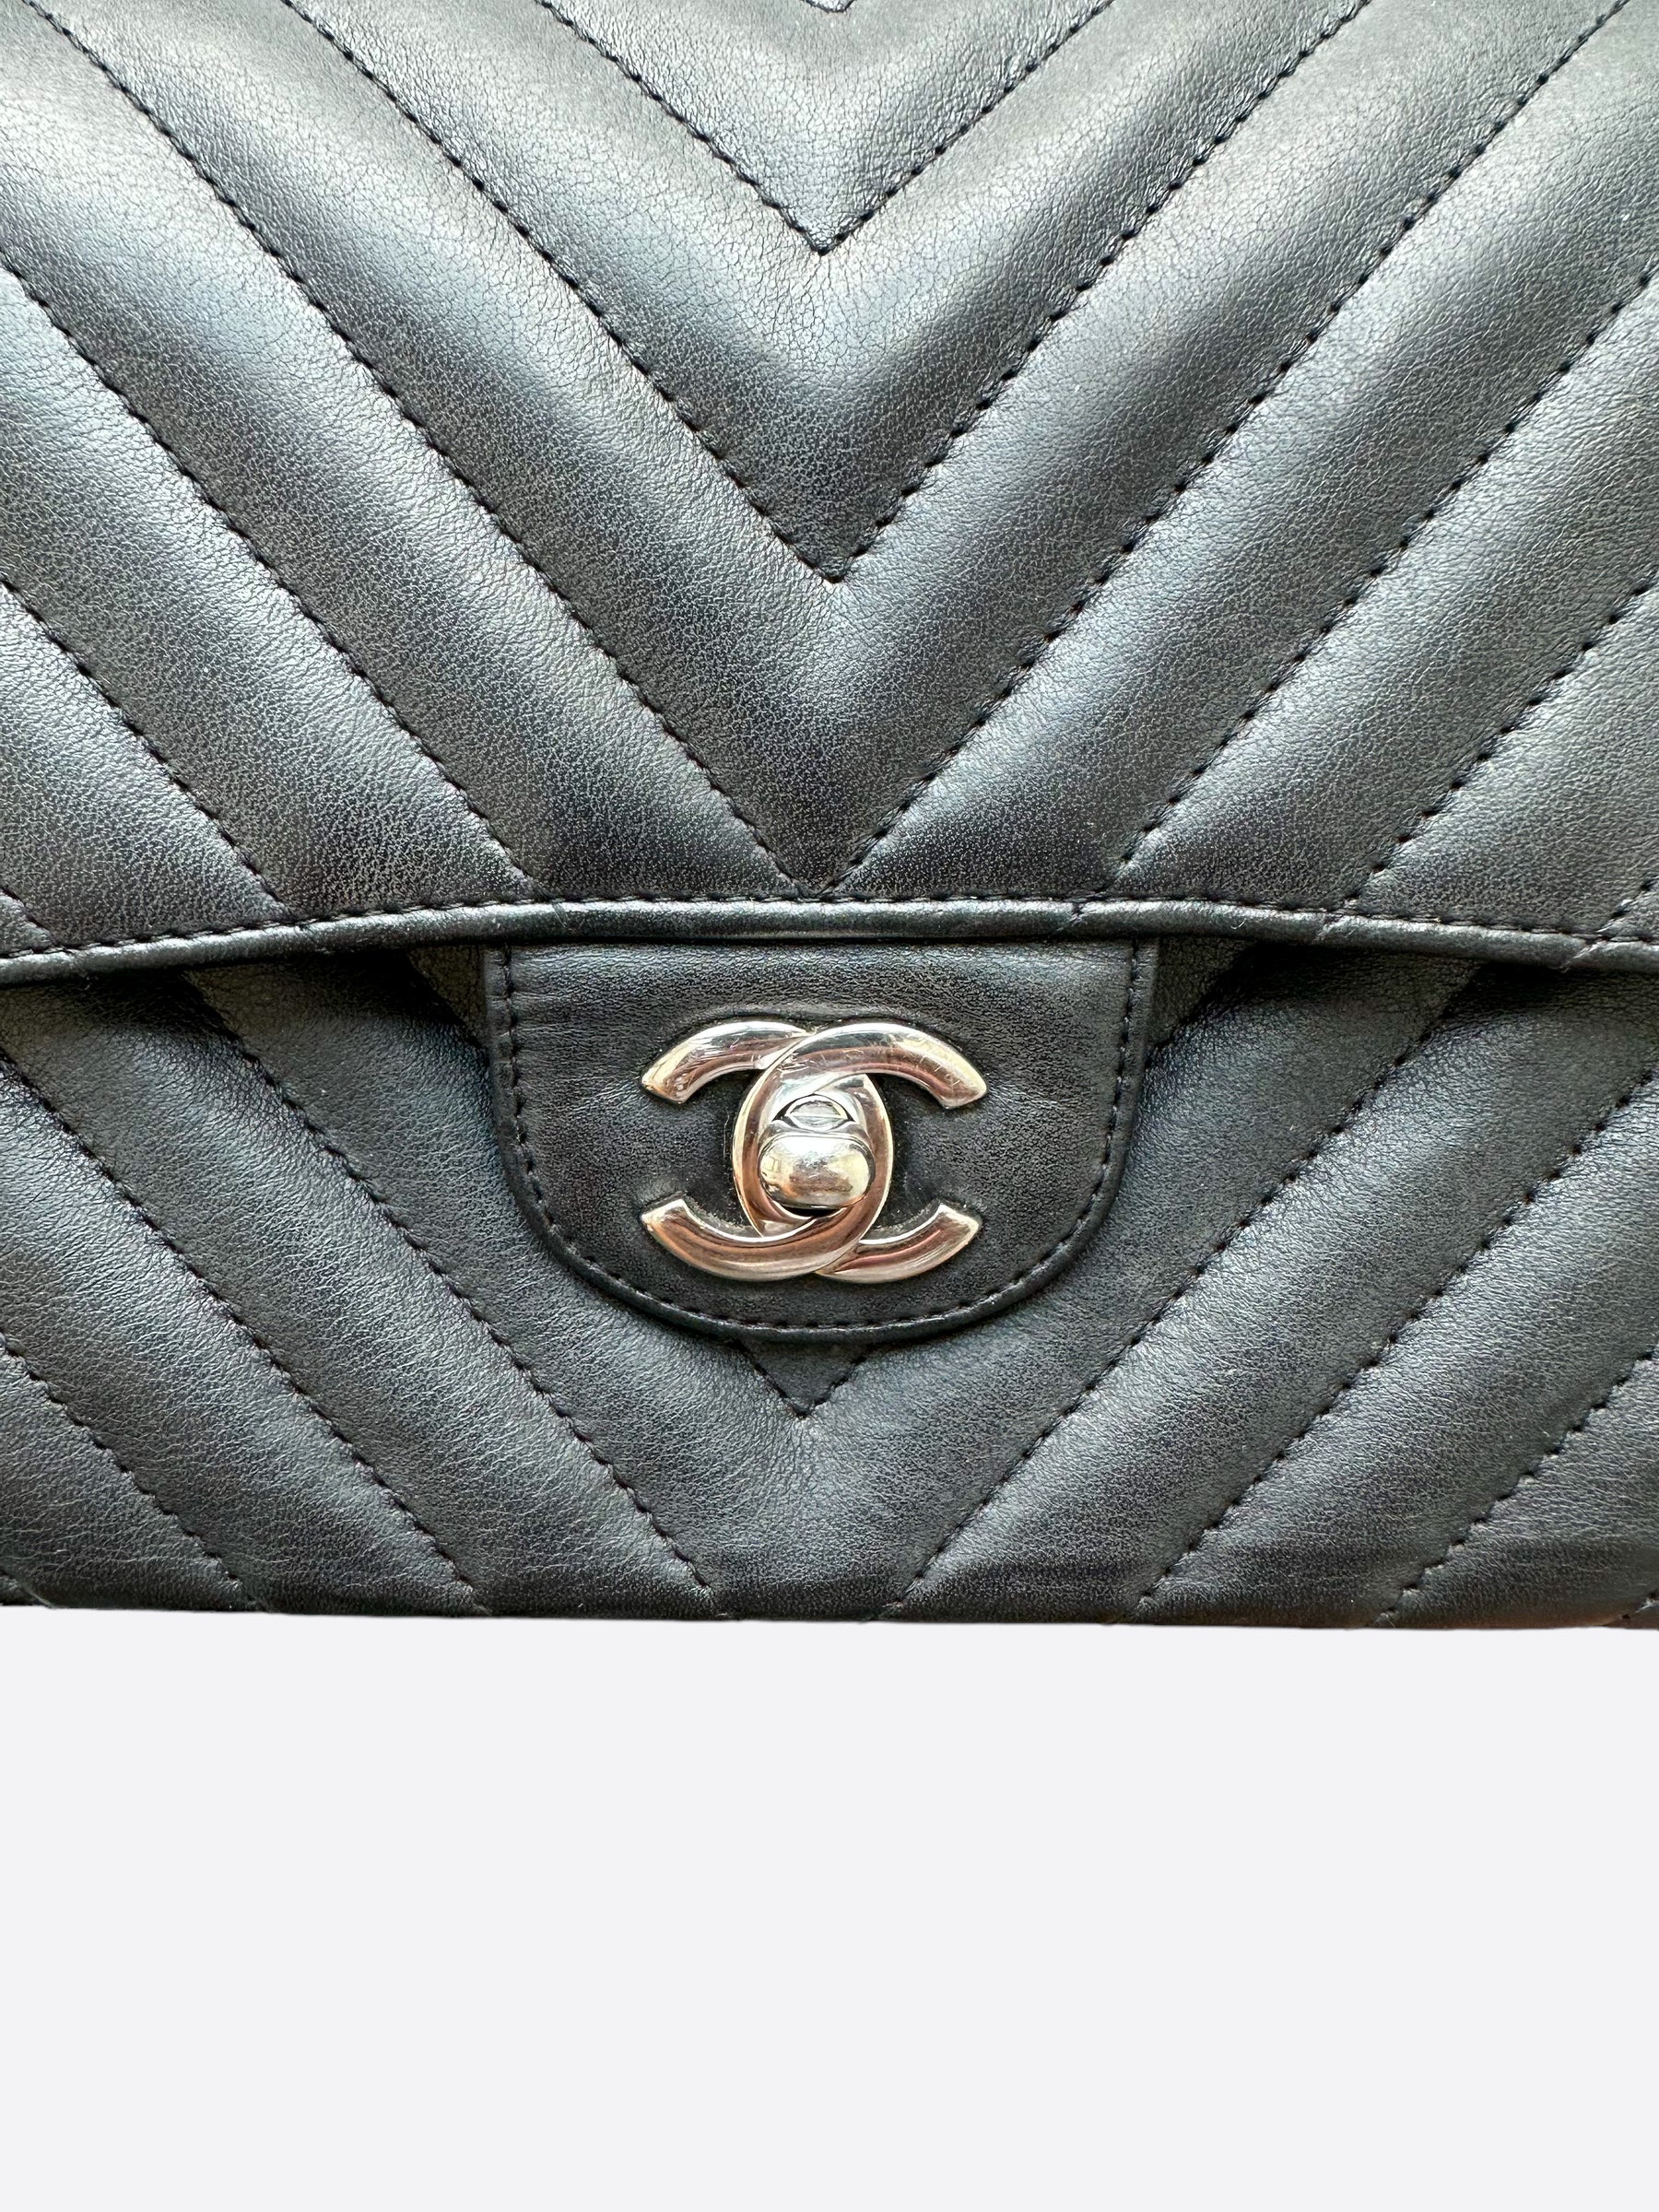 CHANEL Lambskin Chevron Quilted Shoulder Bag Black 240214